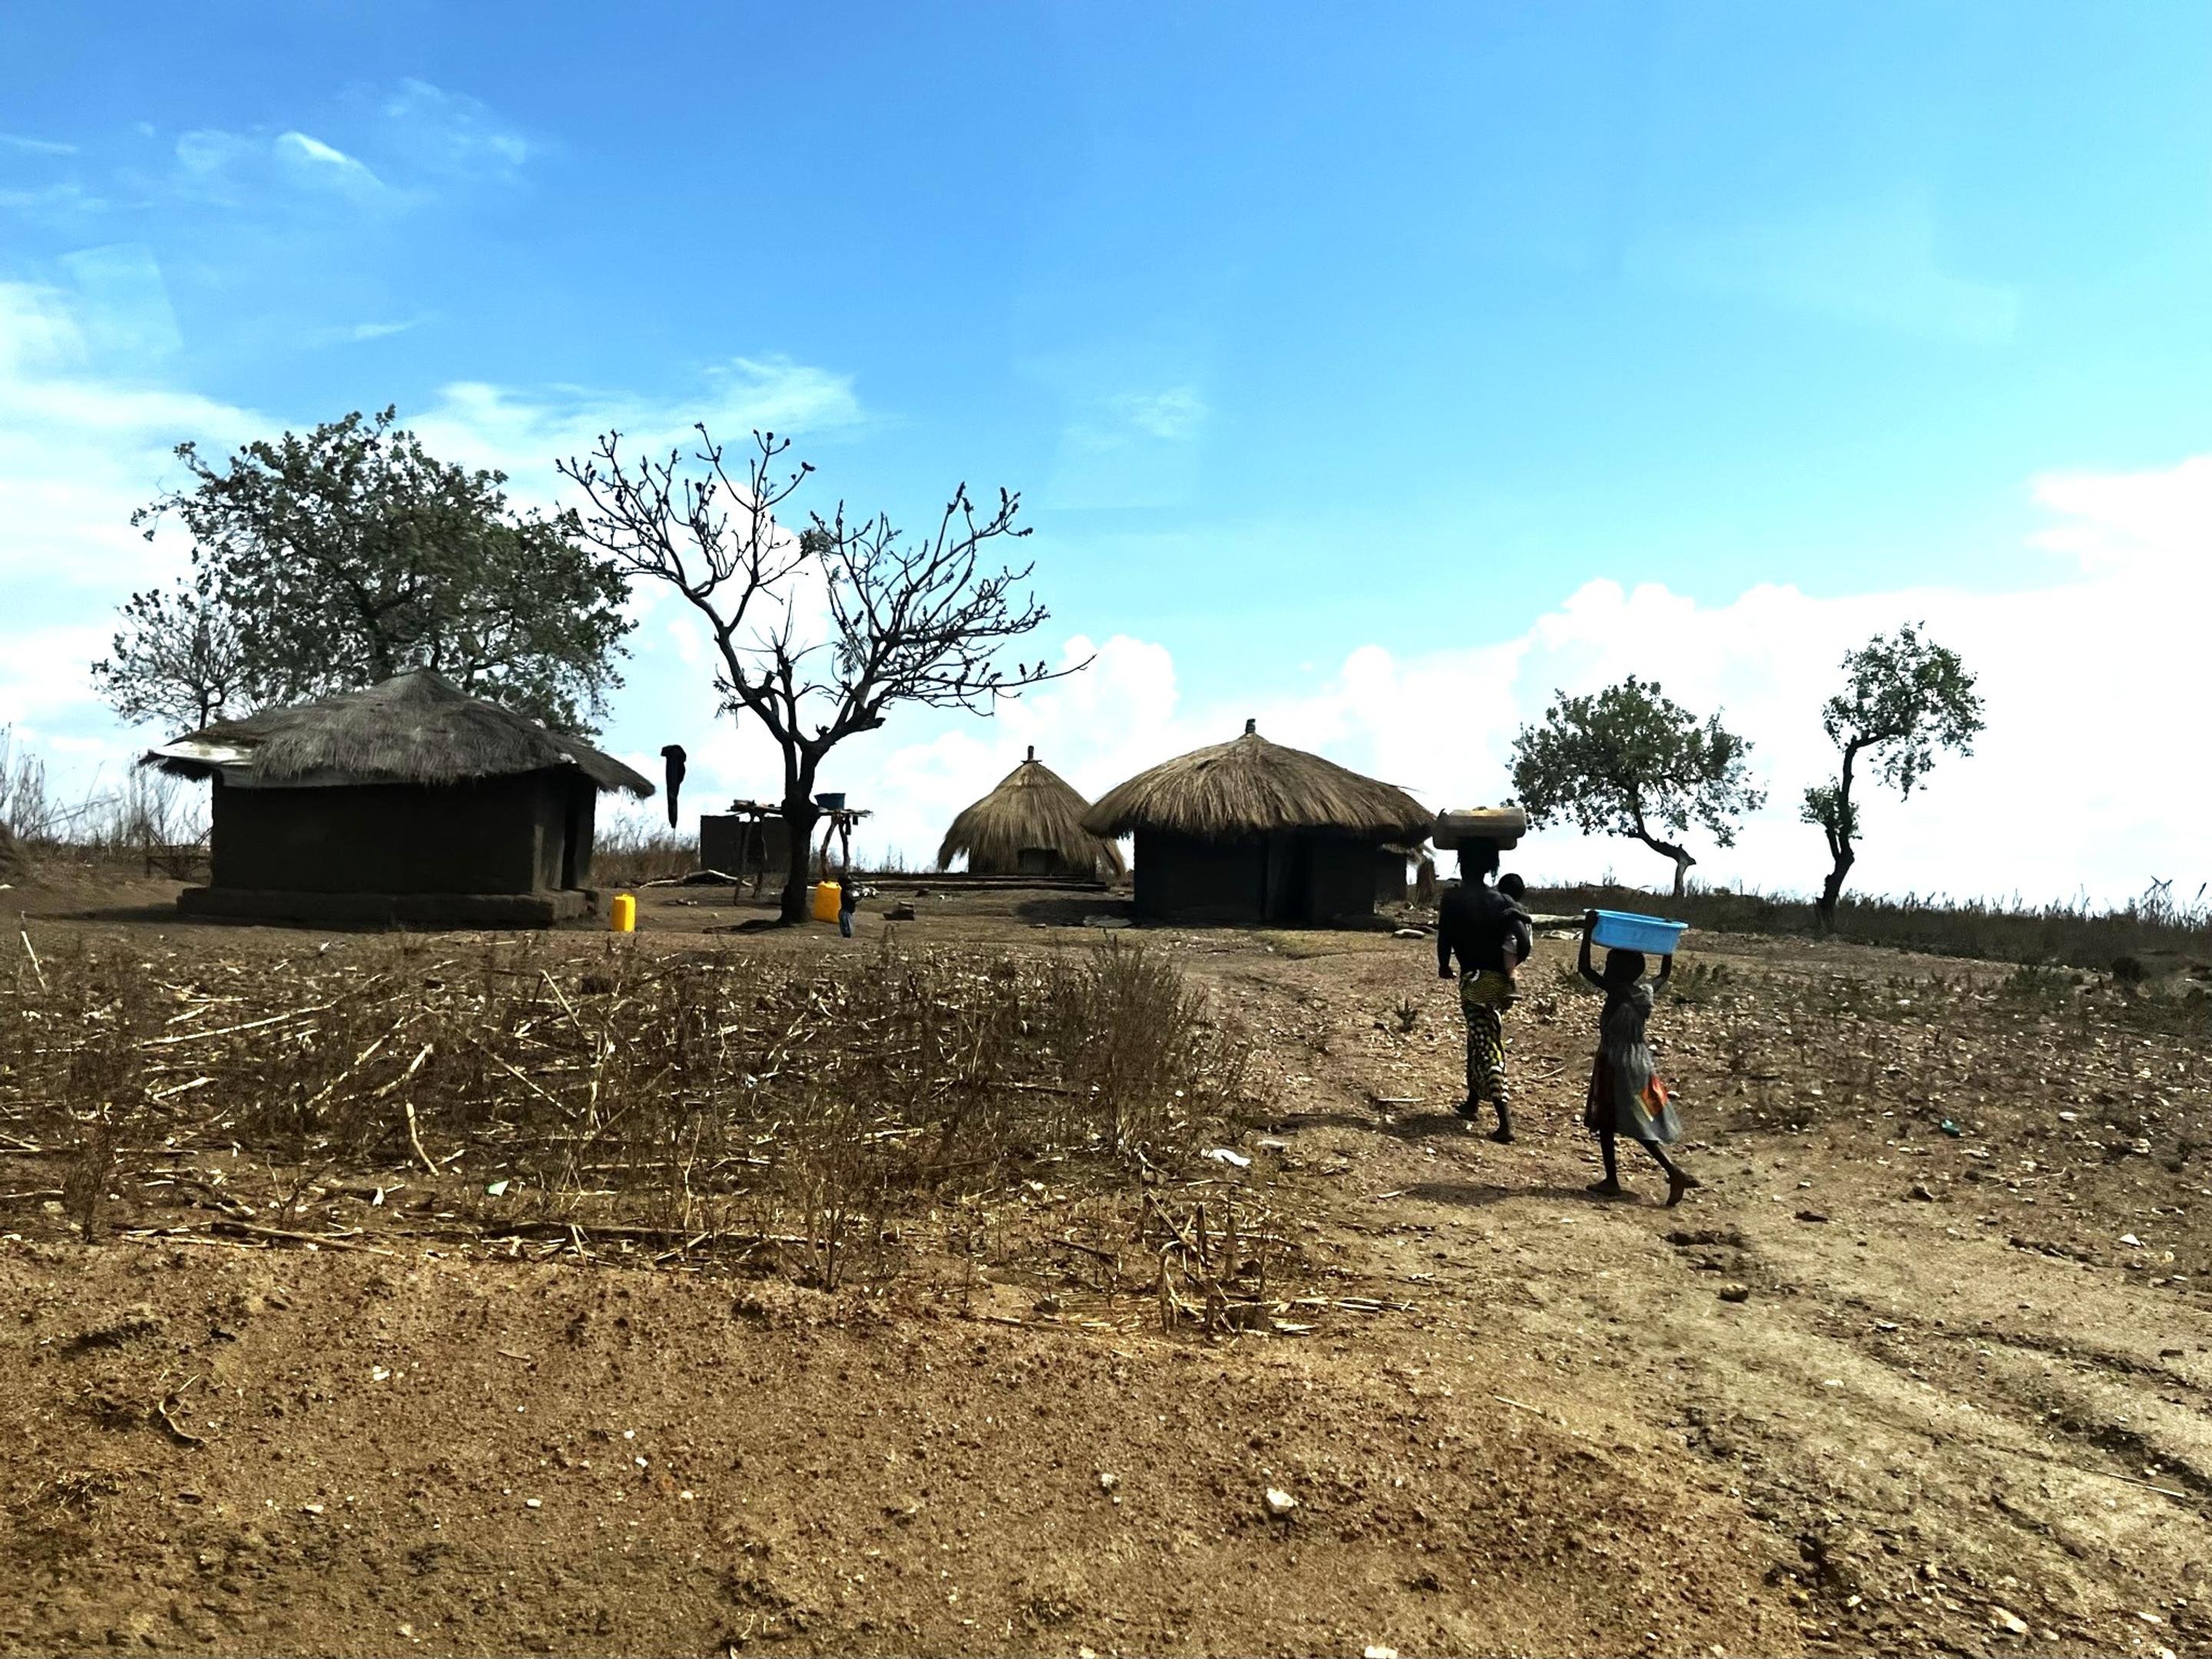 Two people walking towards their shelter in Uganda.